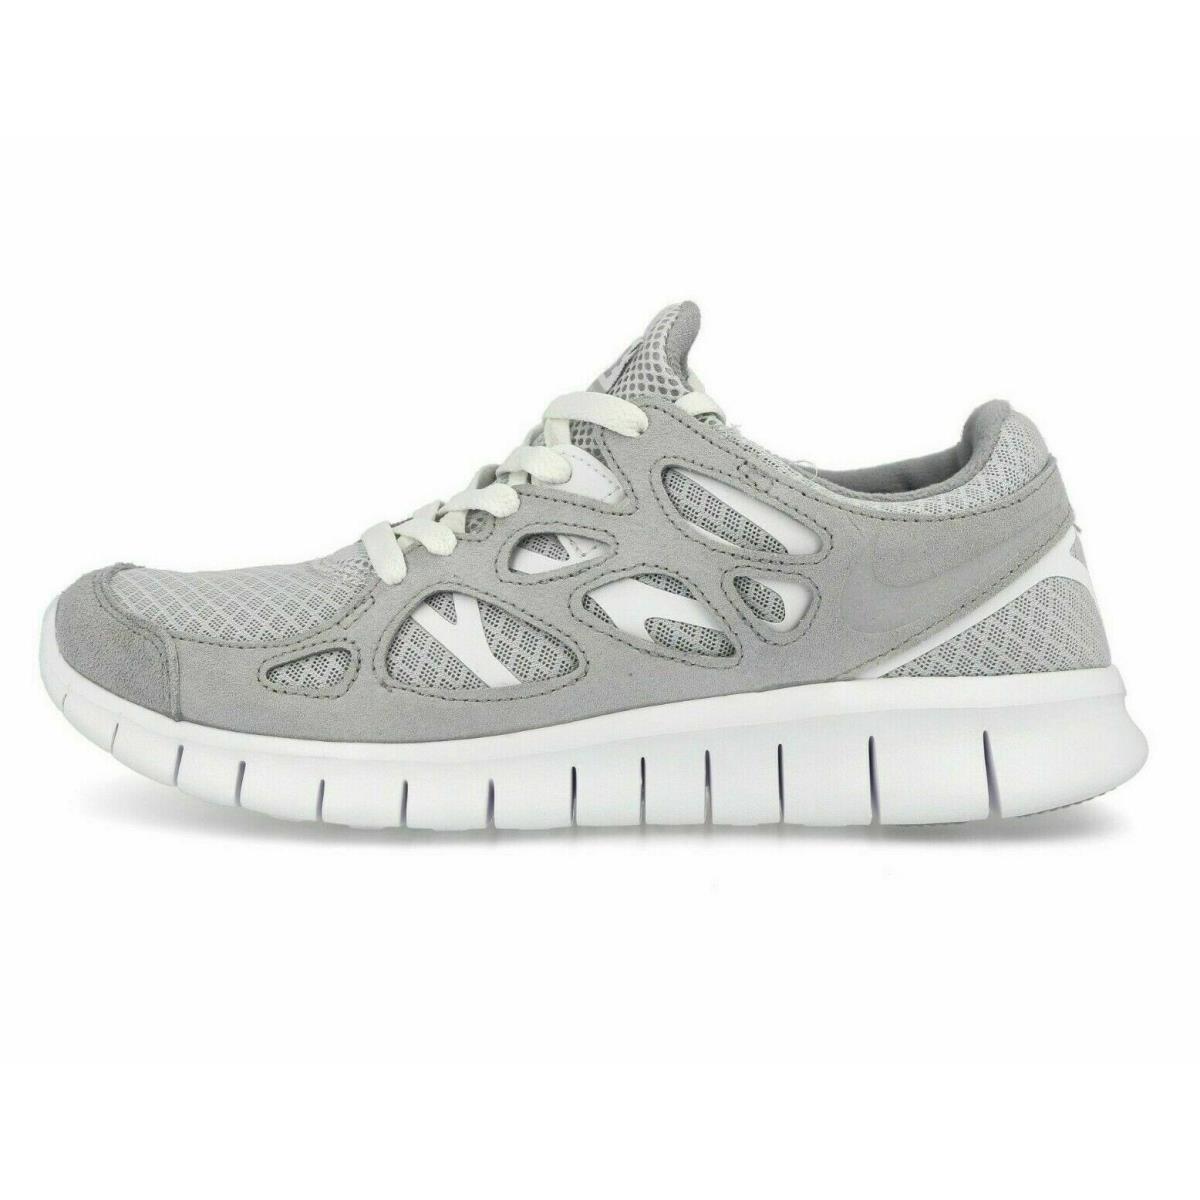 Nike Mens Free Run 2 Running Shoes 537732 014